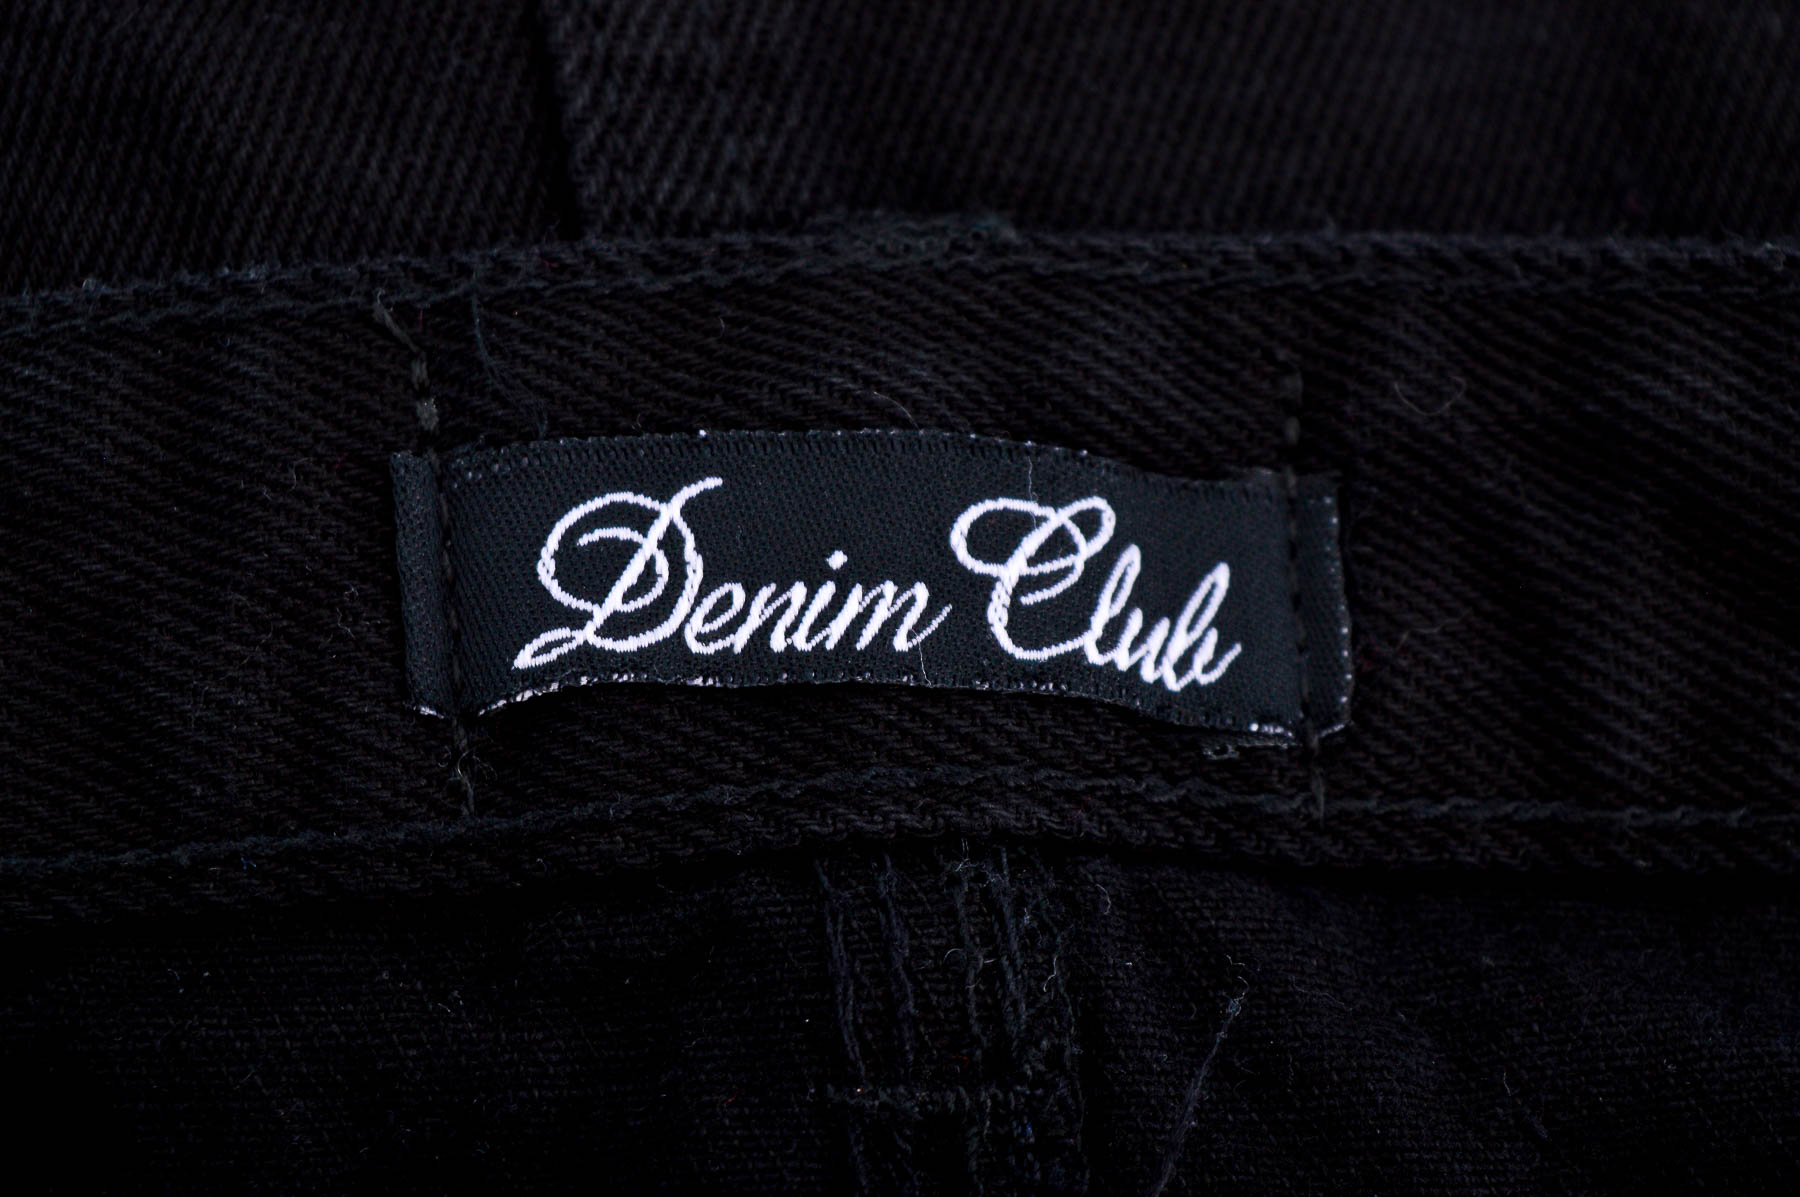 Denim skirt - DENIM CLUB - 2